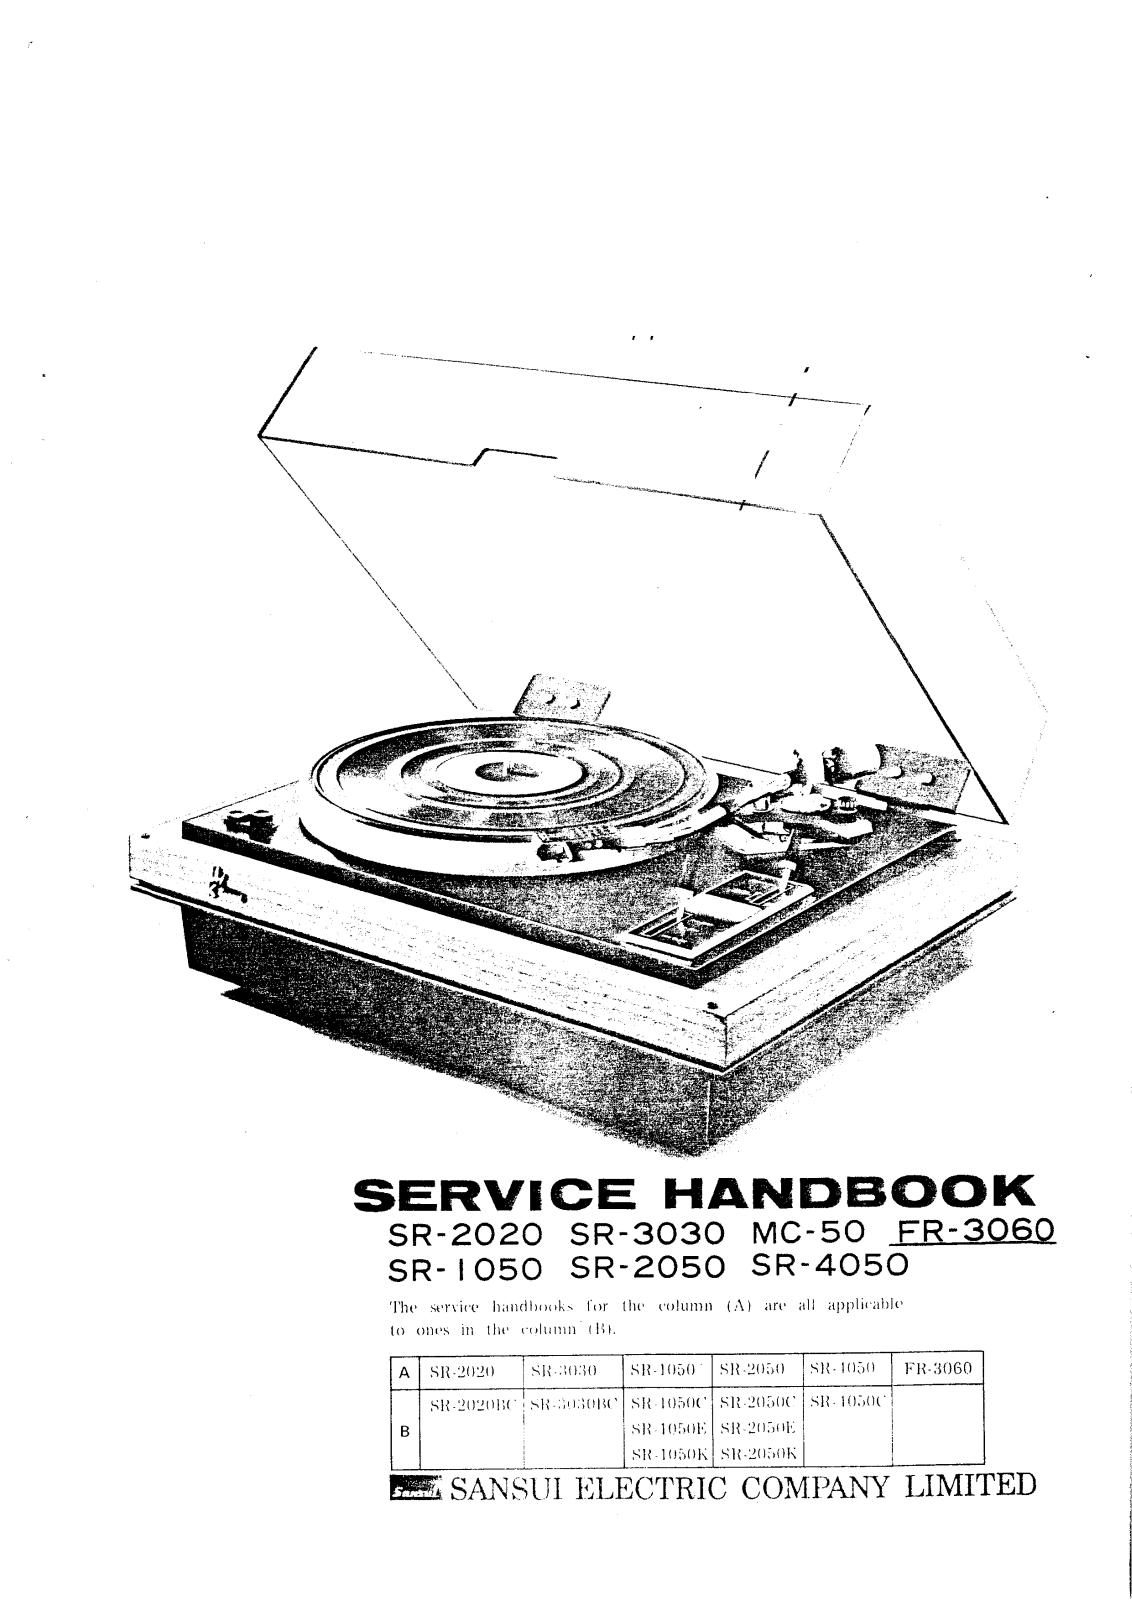 Sansui FR-3060, SR-1050, SR-1060 Service manual